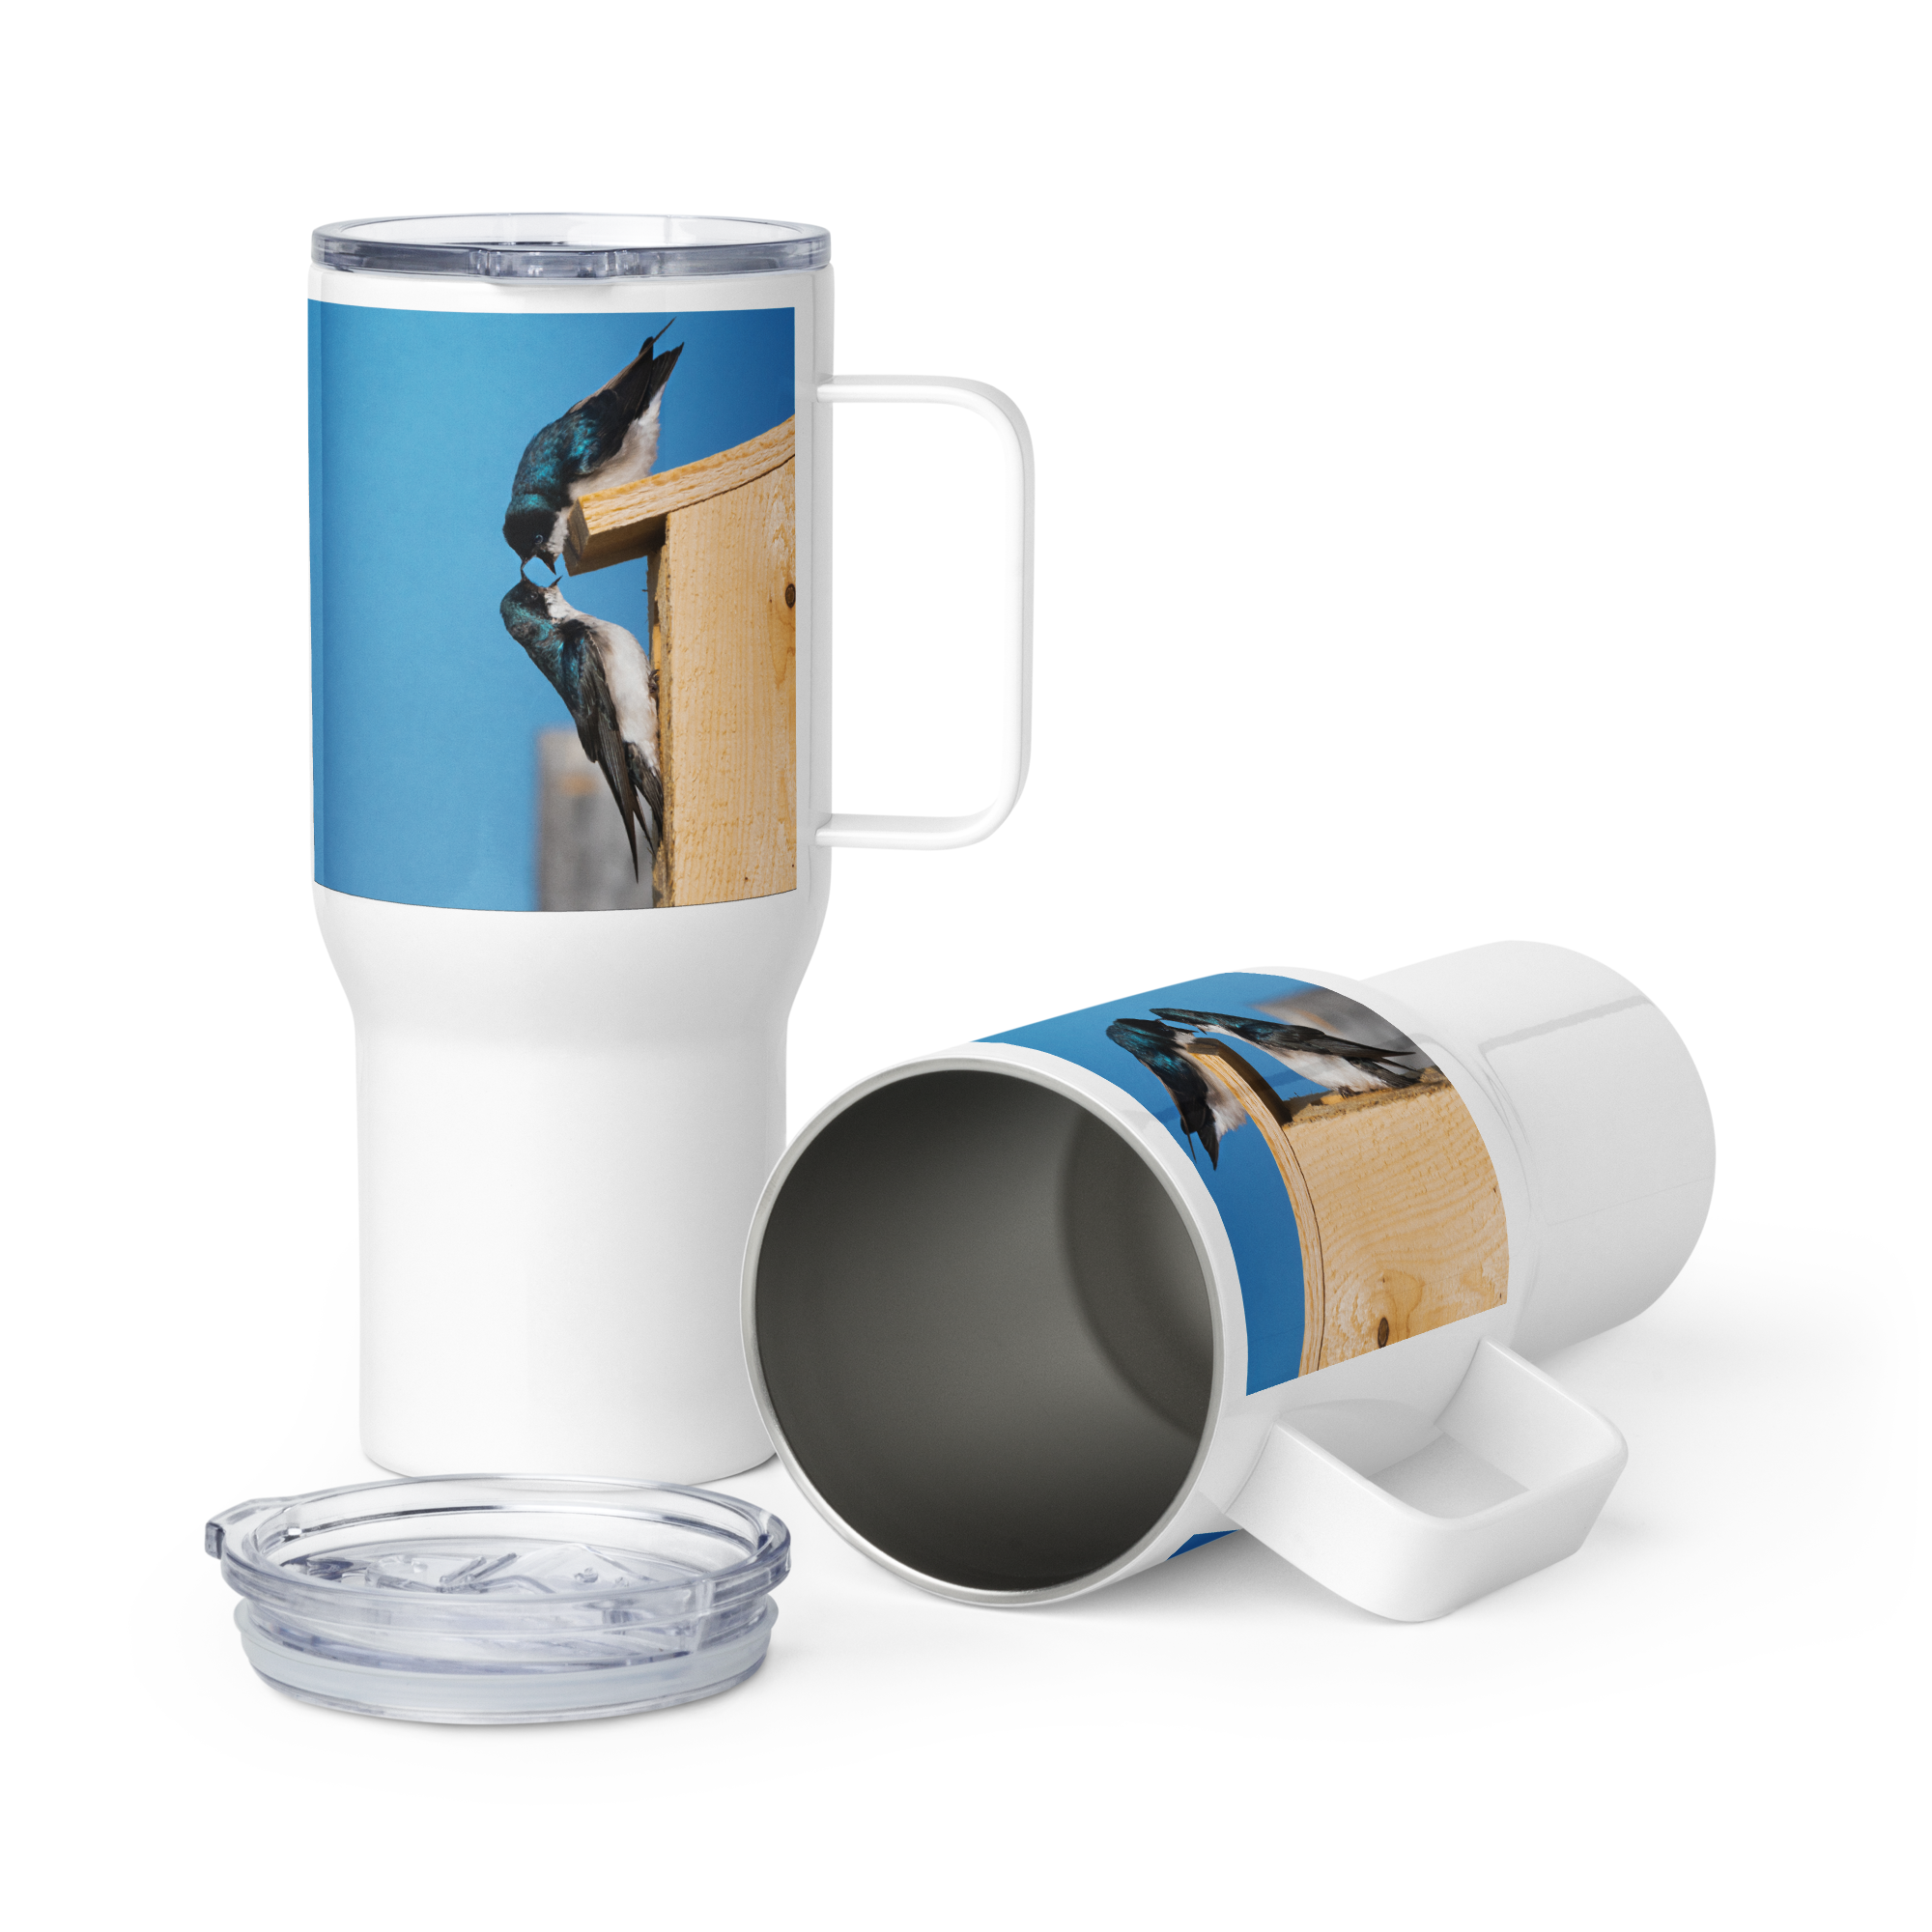 Tree Swallows Travel mug with a handle